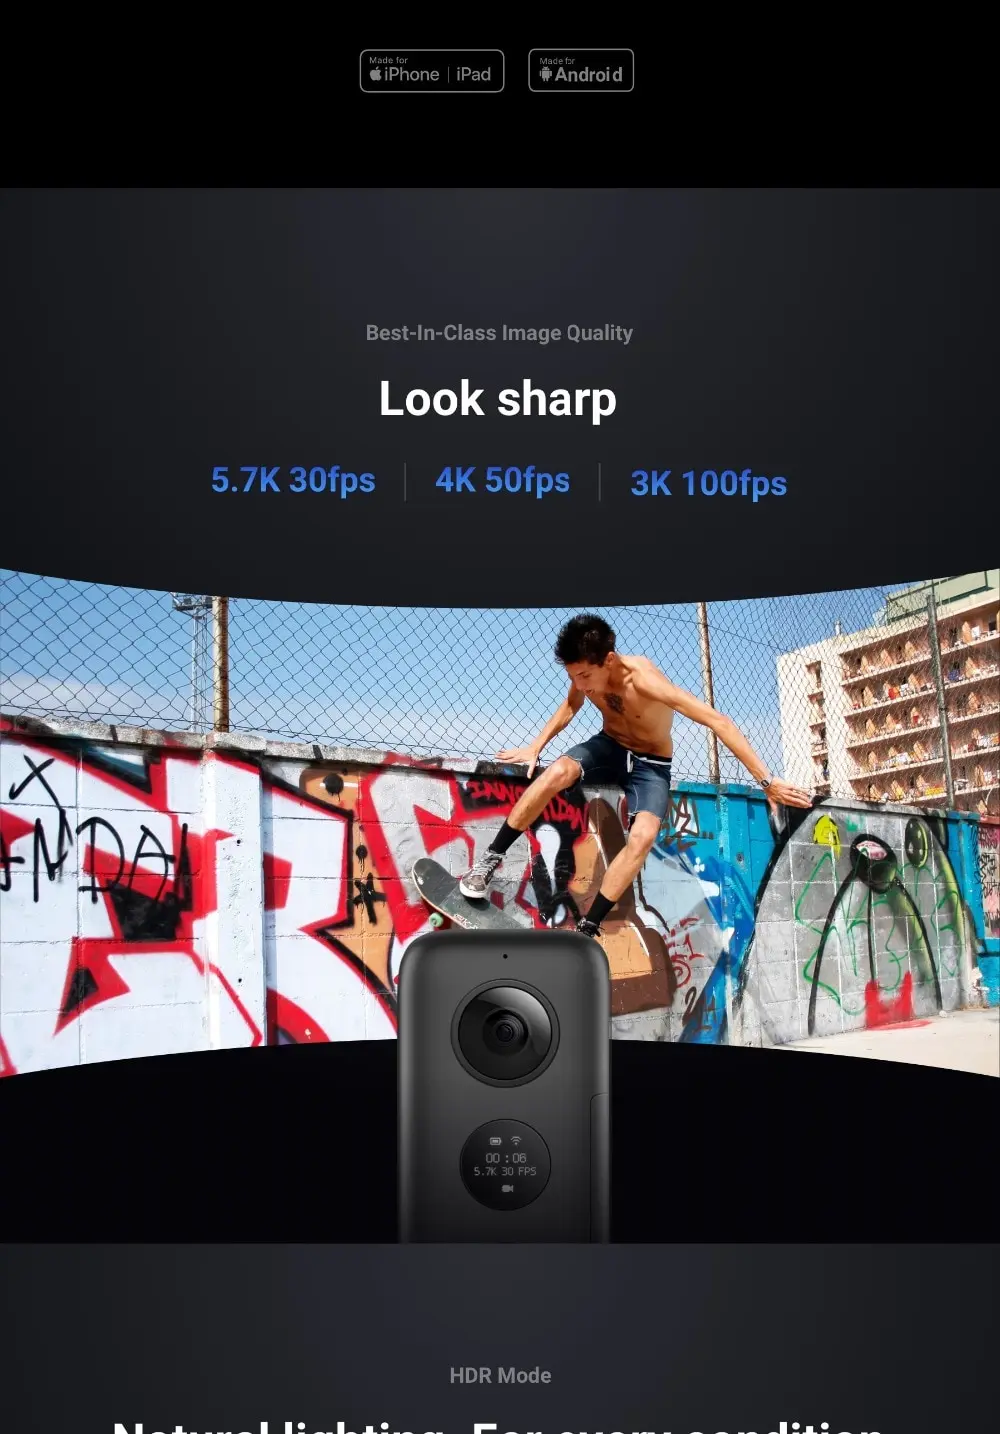 Insta360 Экшн-камера ONE X VR 360 панорамная камера для iPhone и Android 5,7 K видео 18MP фото невидимая селфи палка штатив